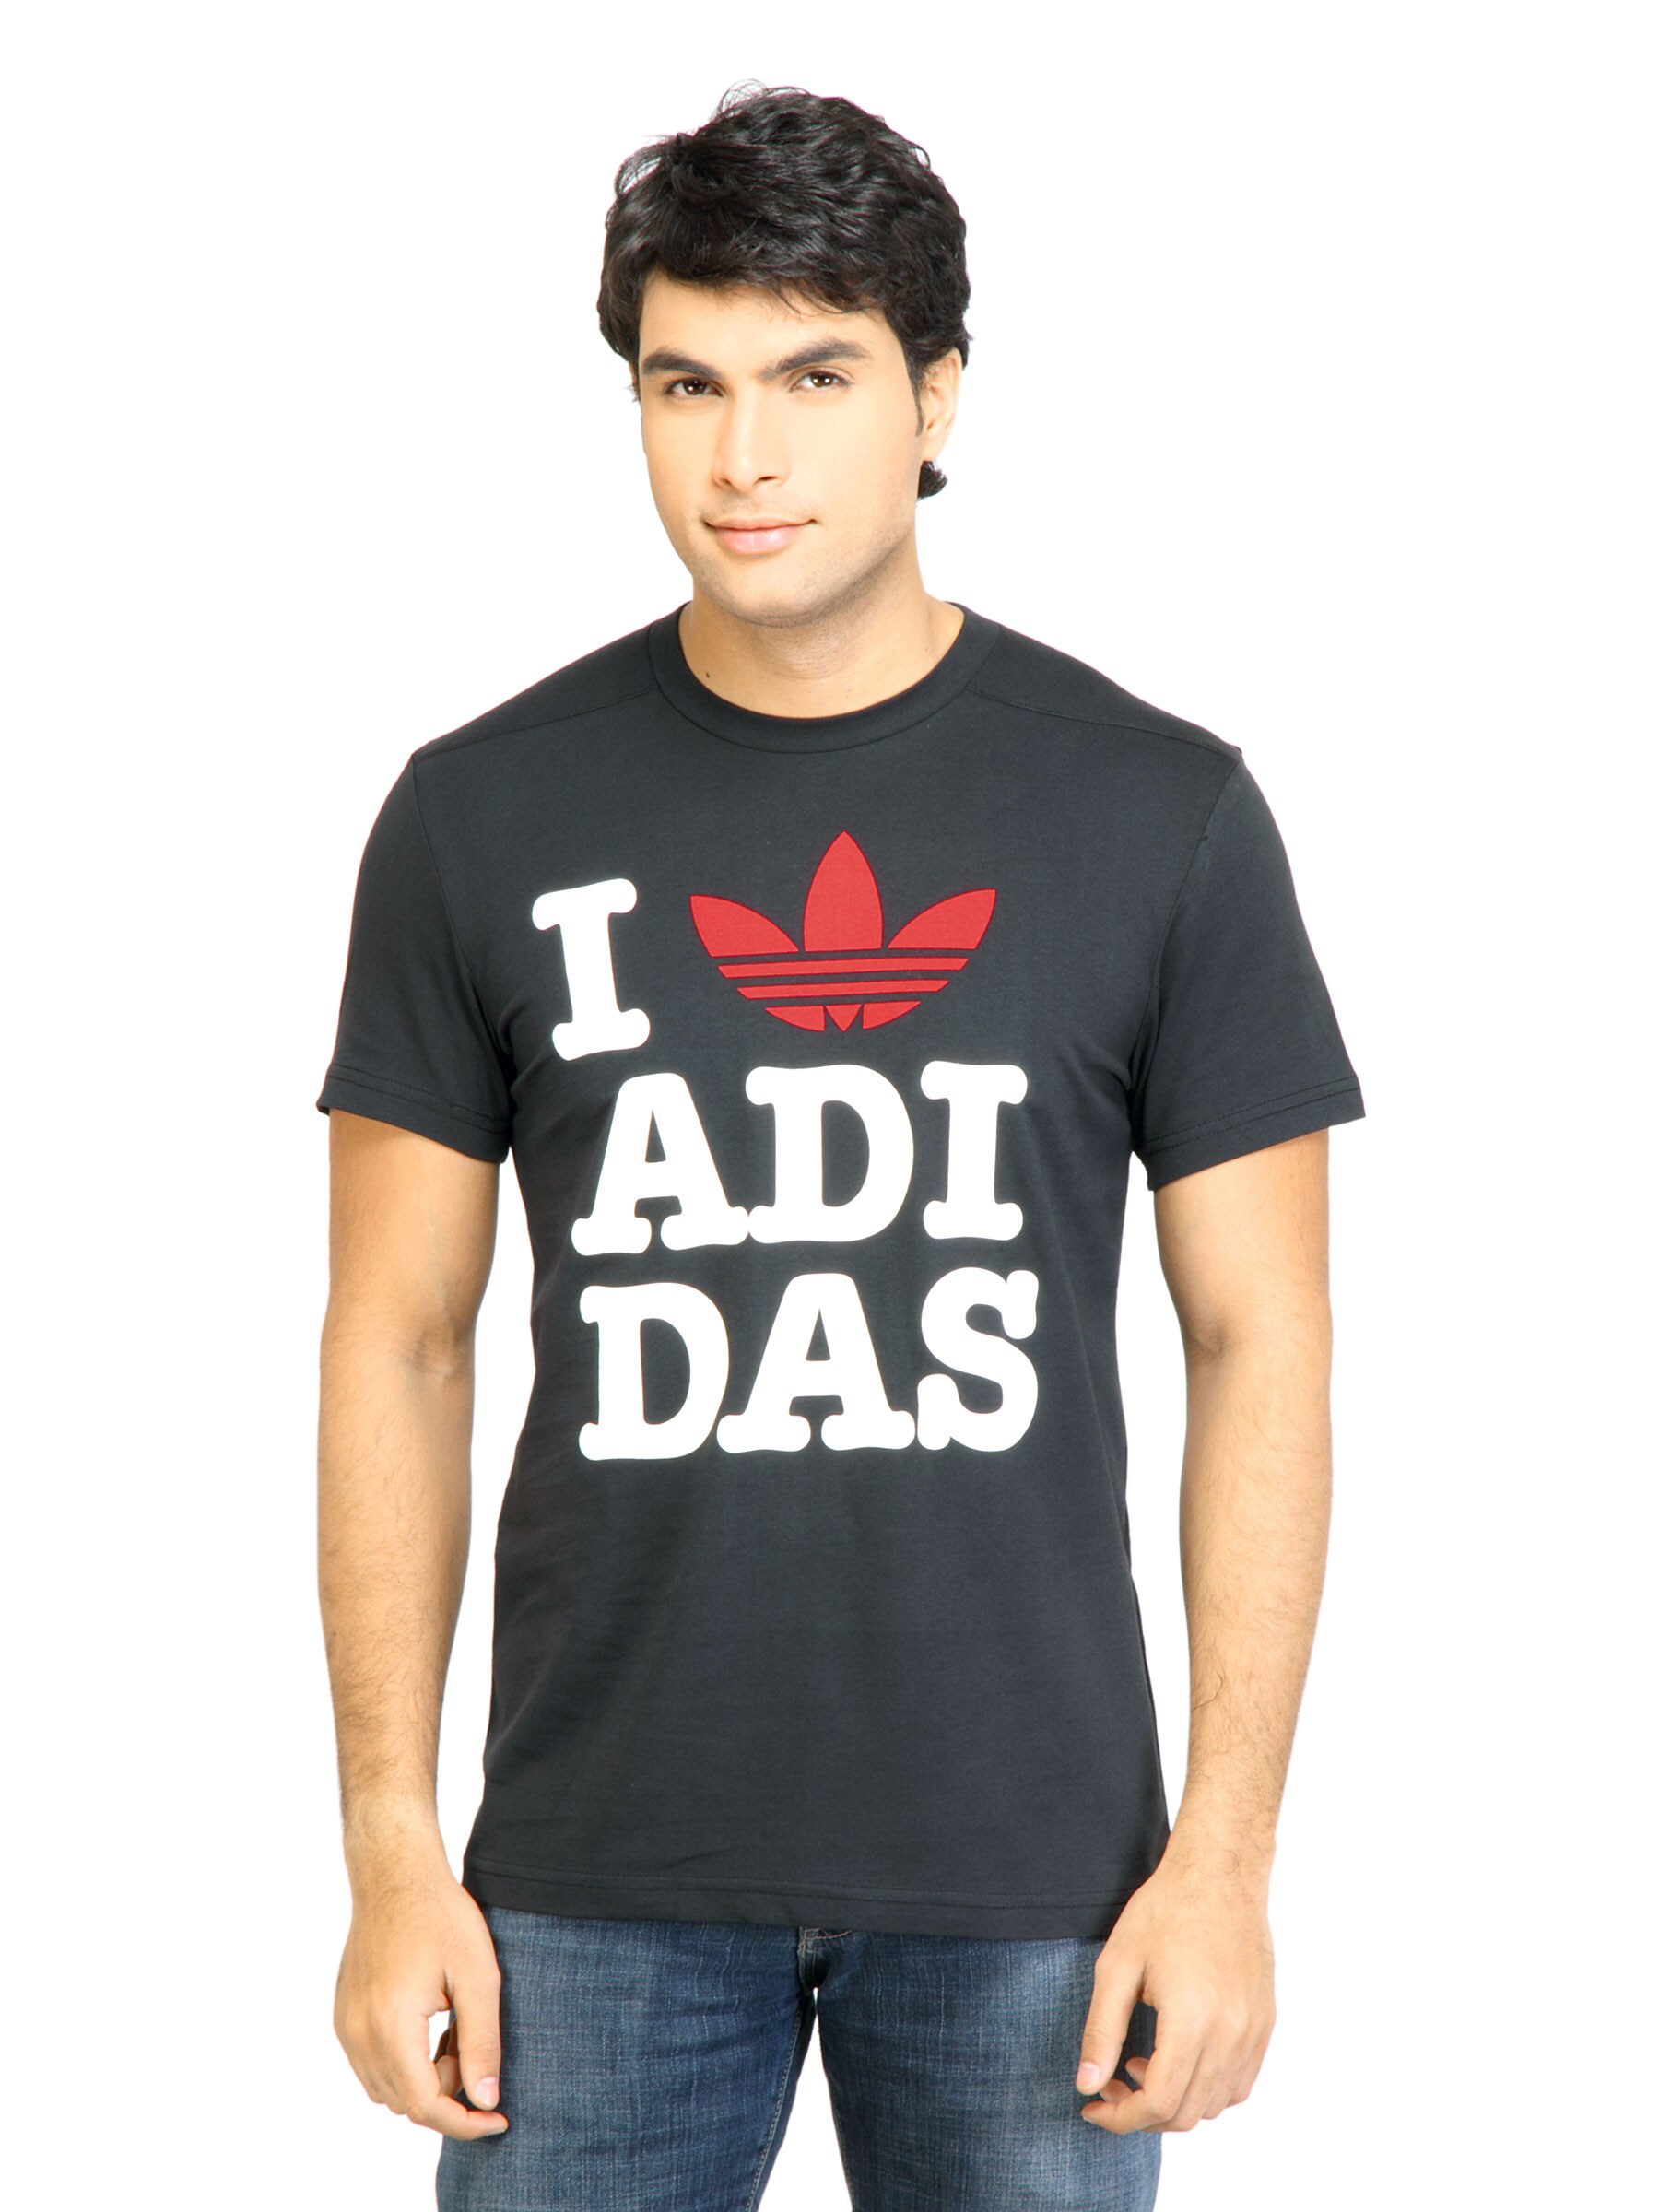 ADIDAS Originals Men Black Tshirt